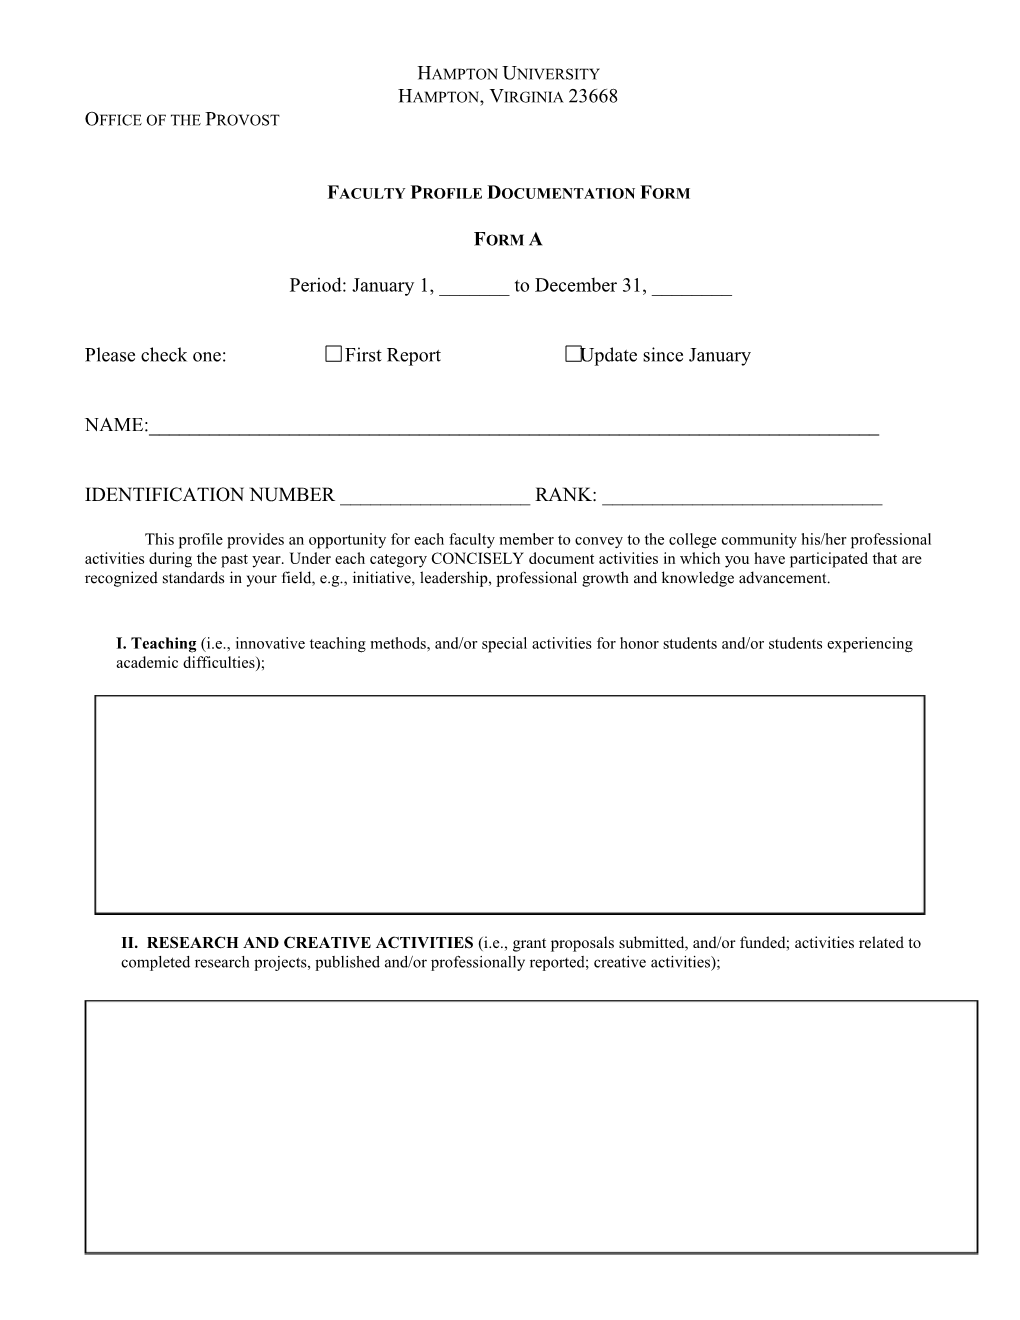 Faculty Profile Documentation Form